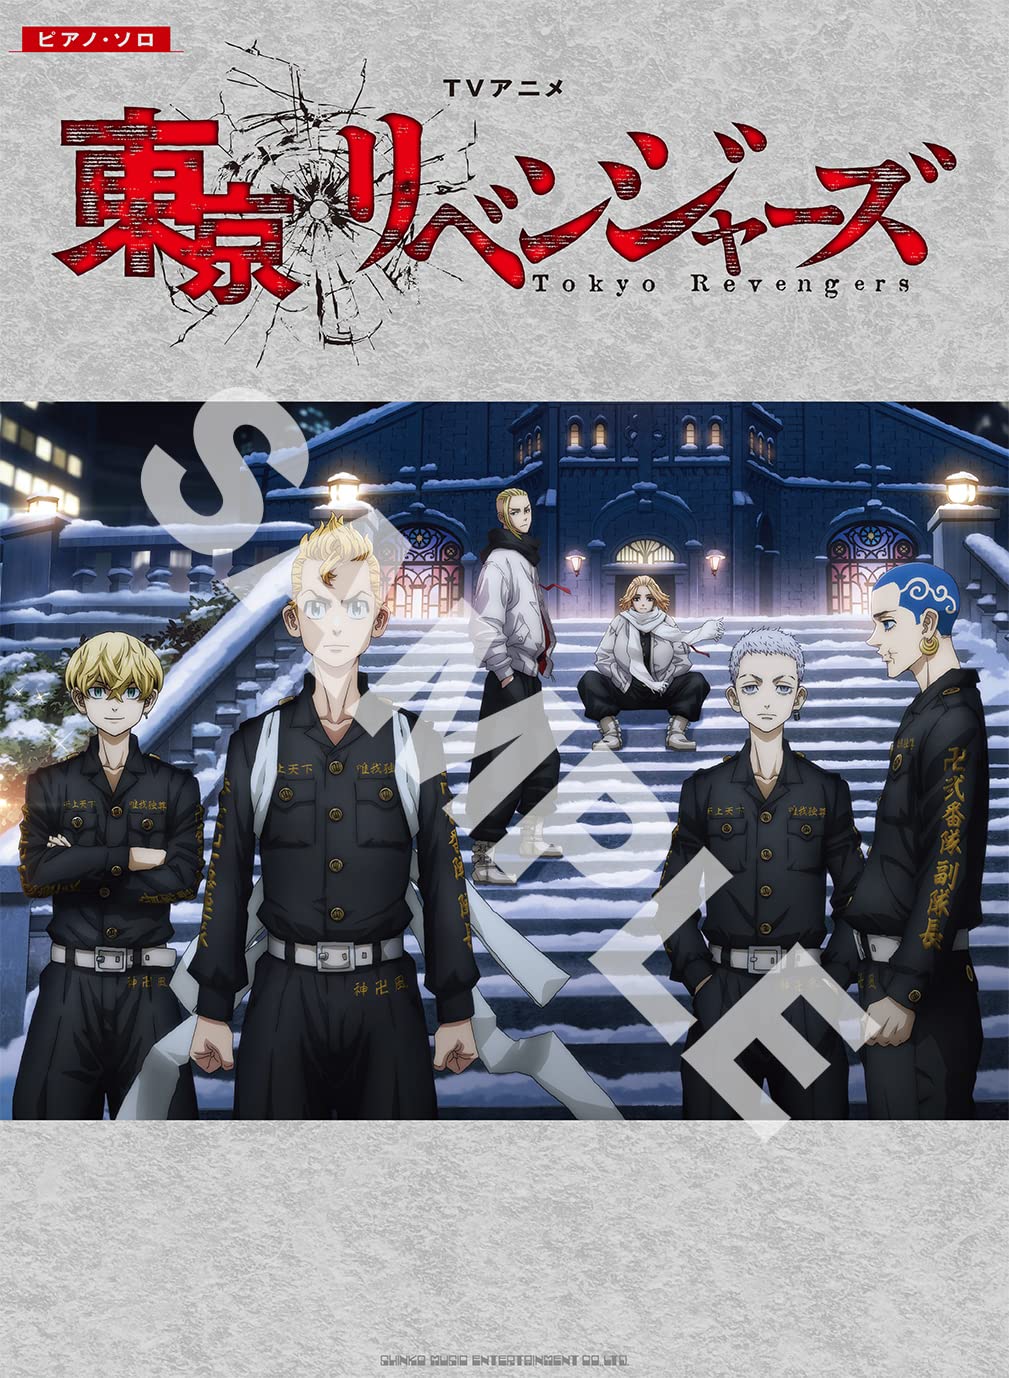 TV Anime"Tokyo Revengers" for Piano Solo Official(Easy/Intermediate/Advanced)